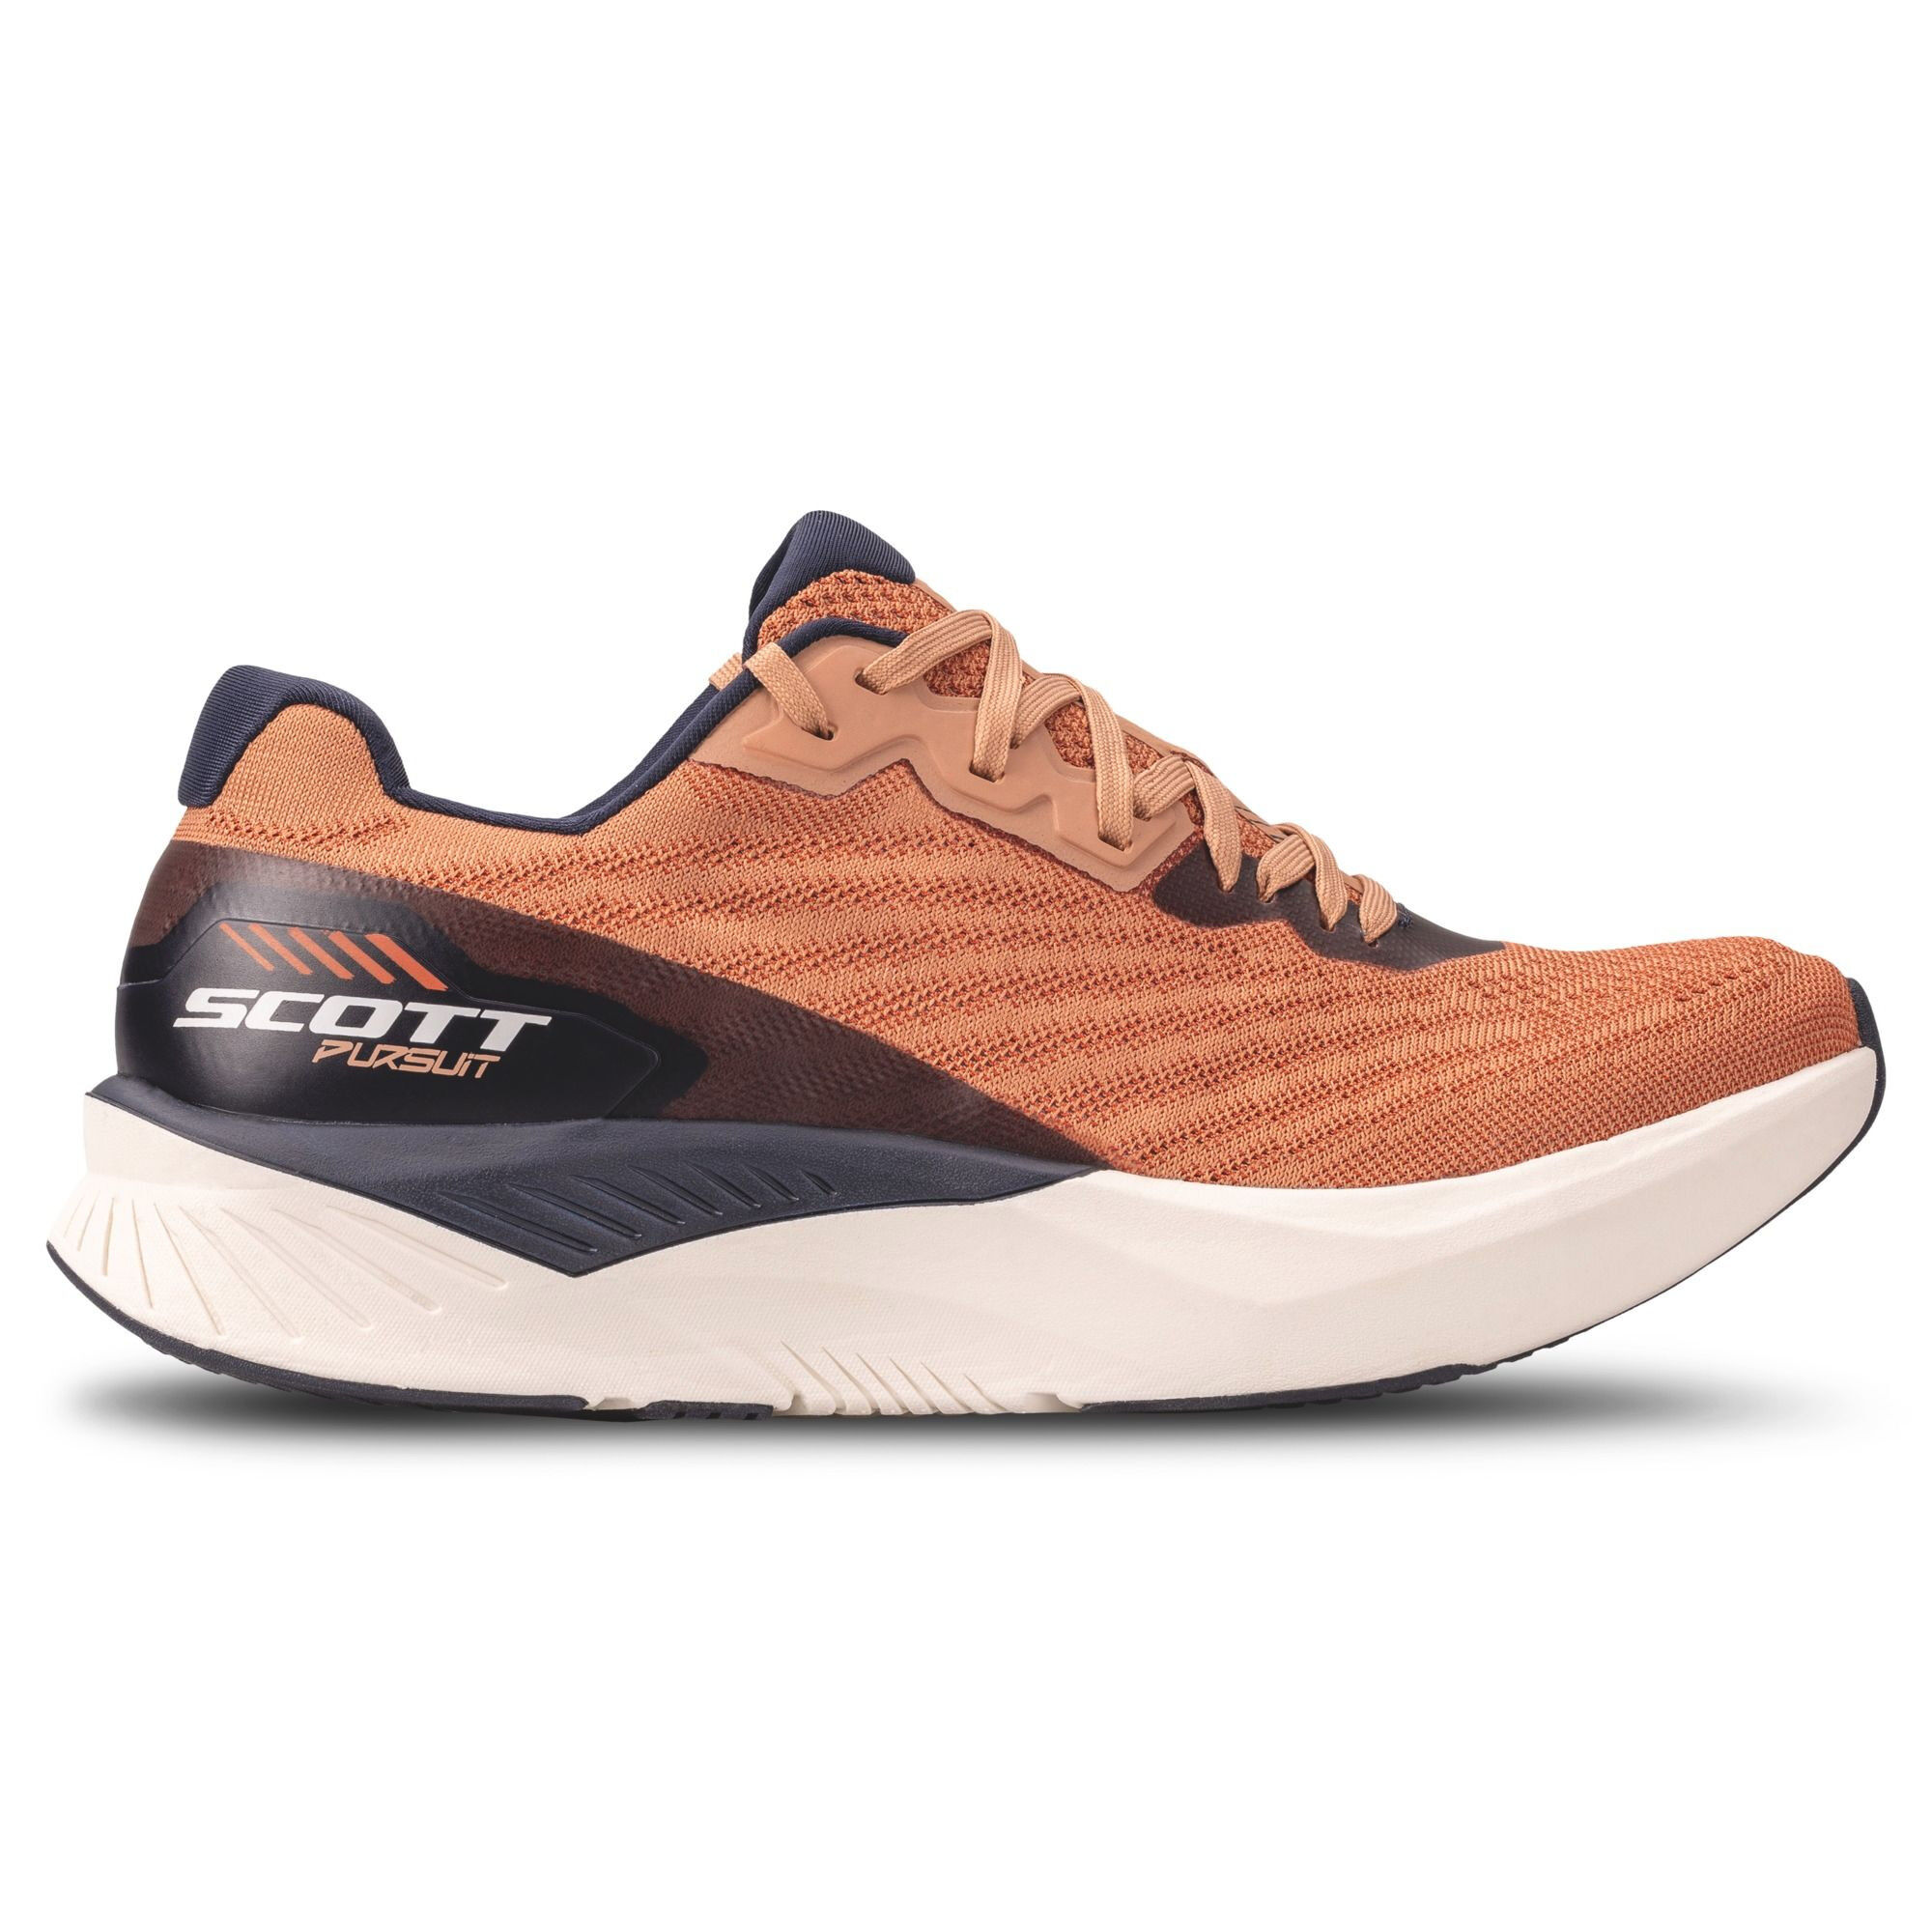 Scott Pursuit - Running shoes - Women's